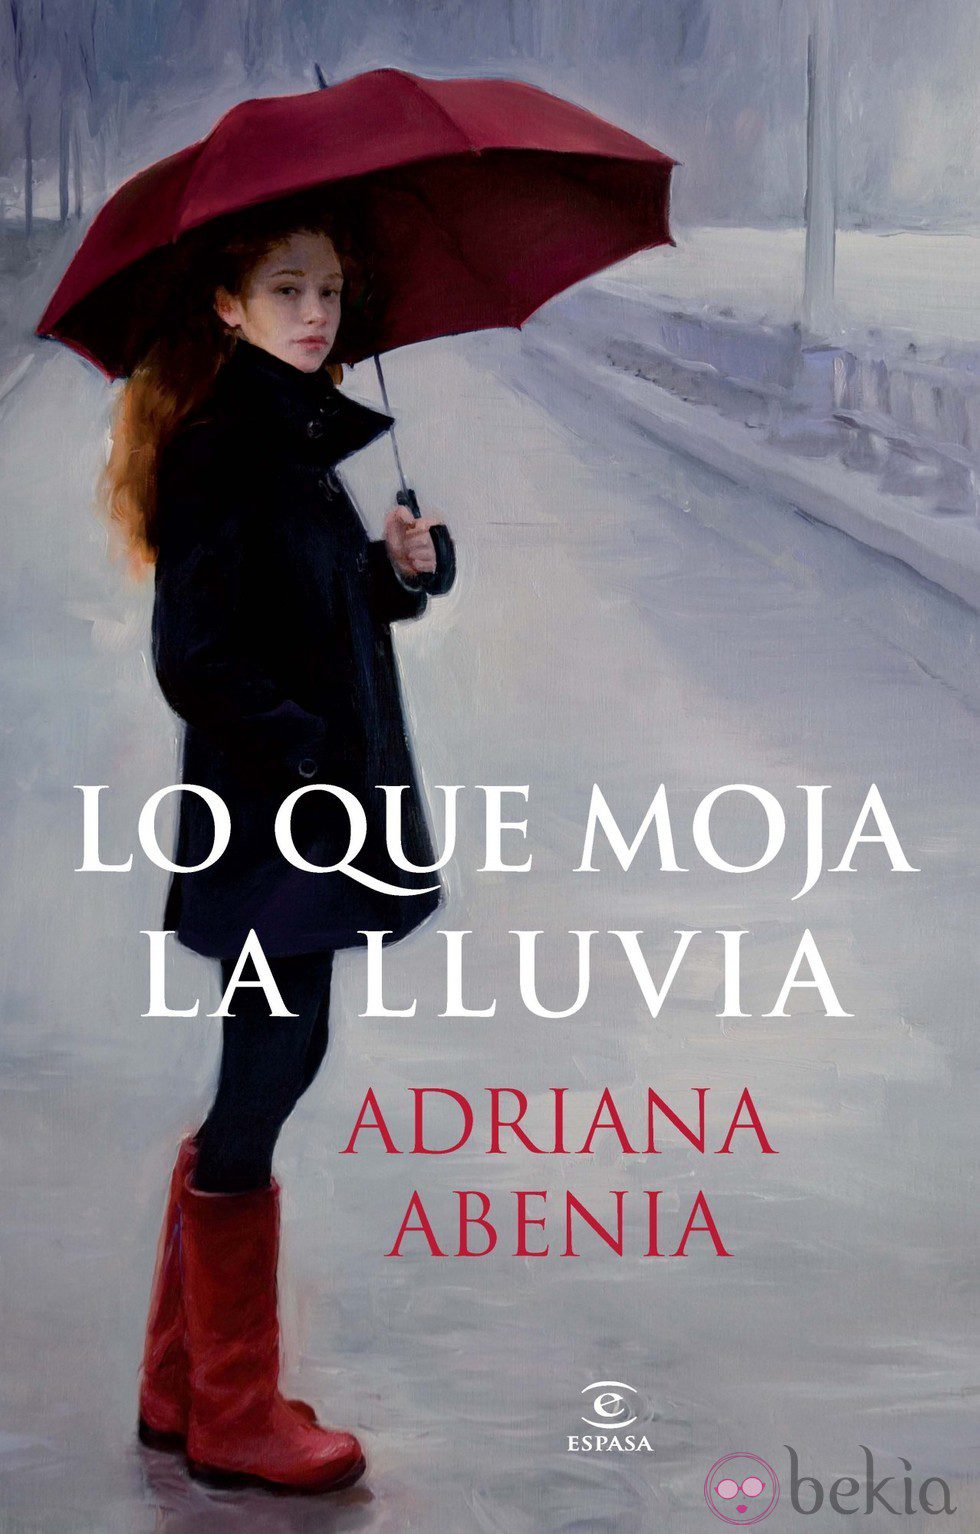 Portada del libro de Adriana Abenia 'Lo que moja la lluvia'